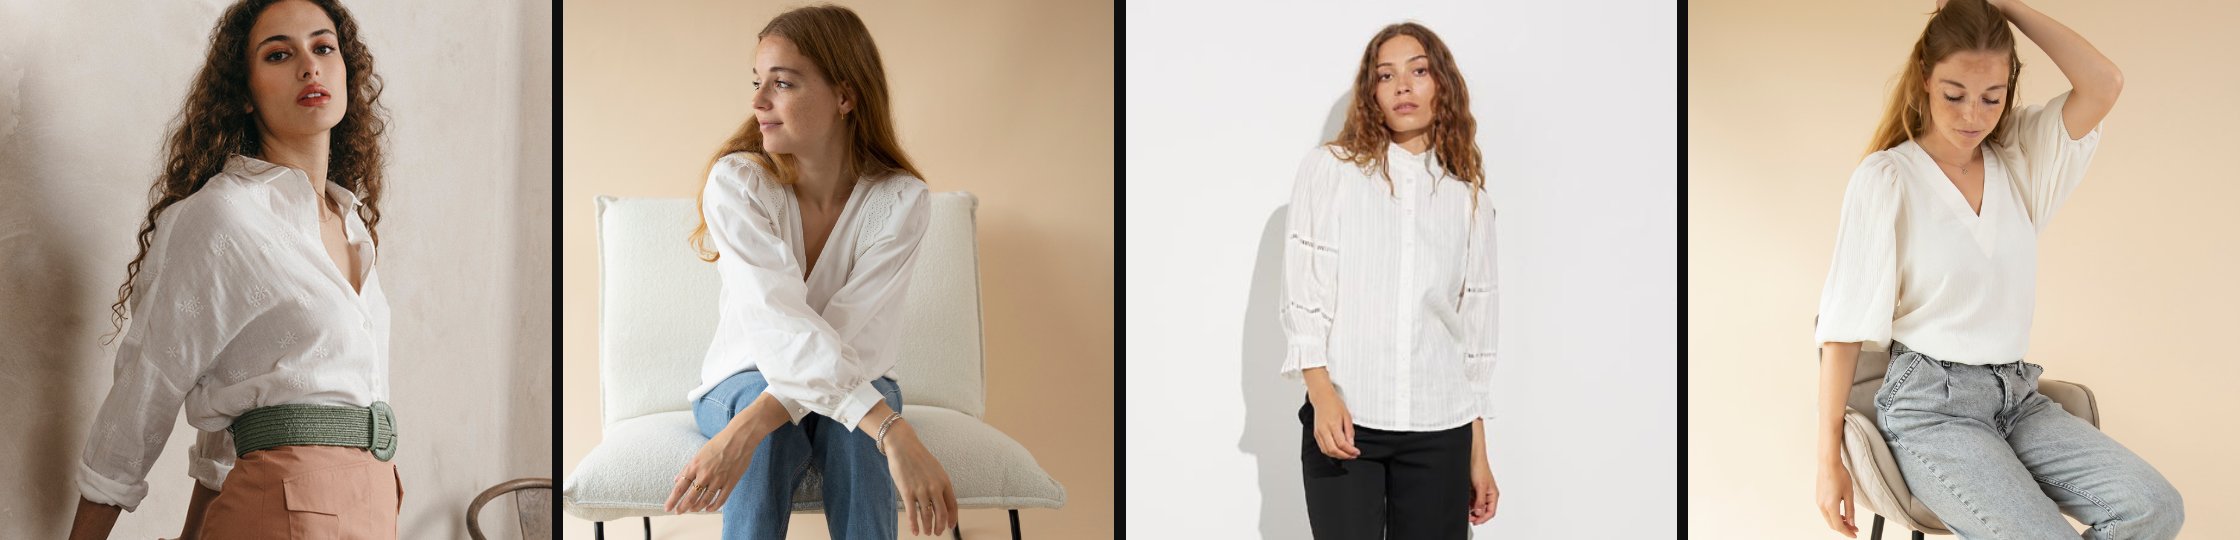 Witte blouse online kopen? Hier moet je op letten